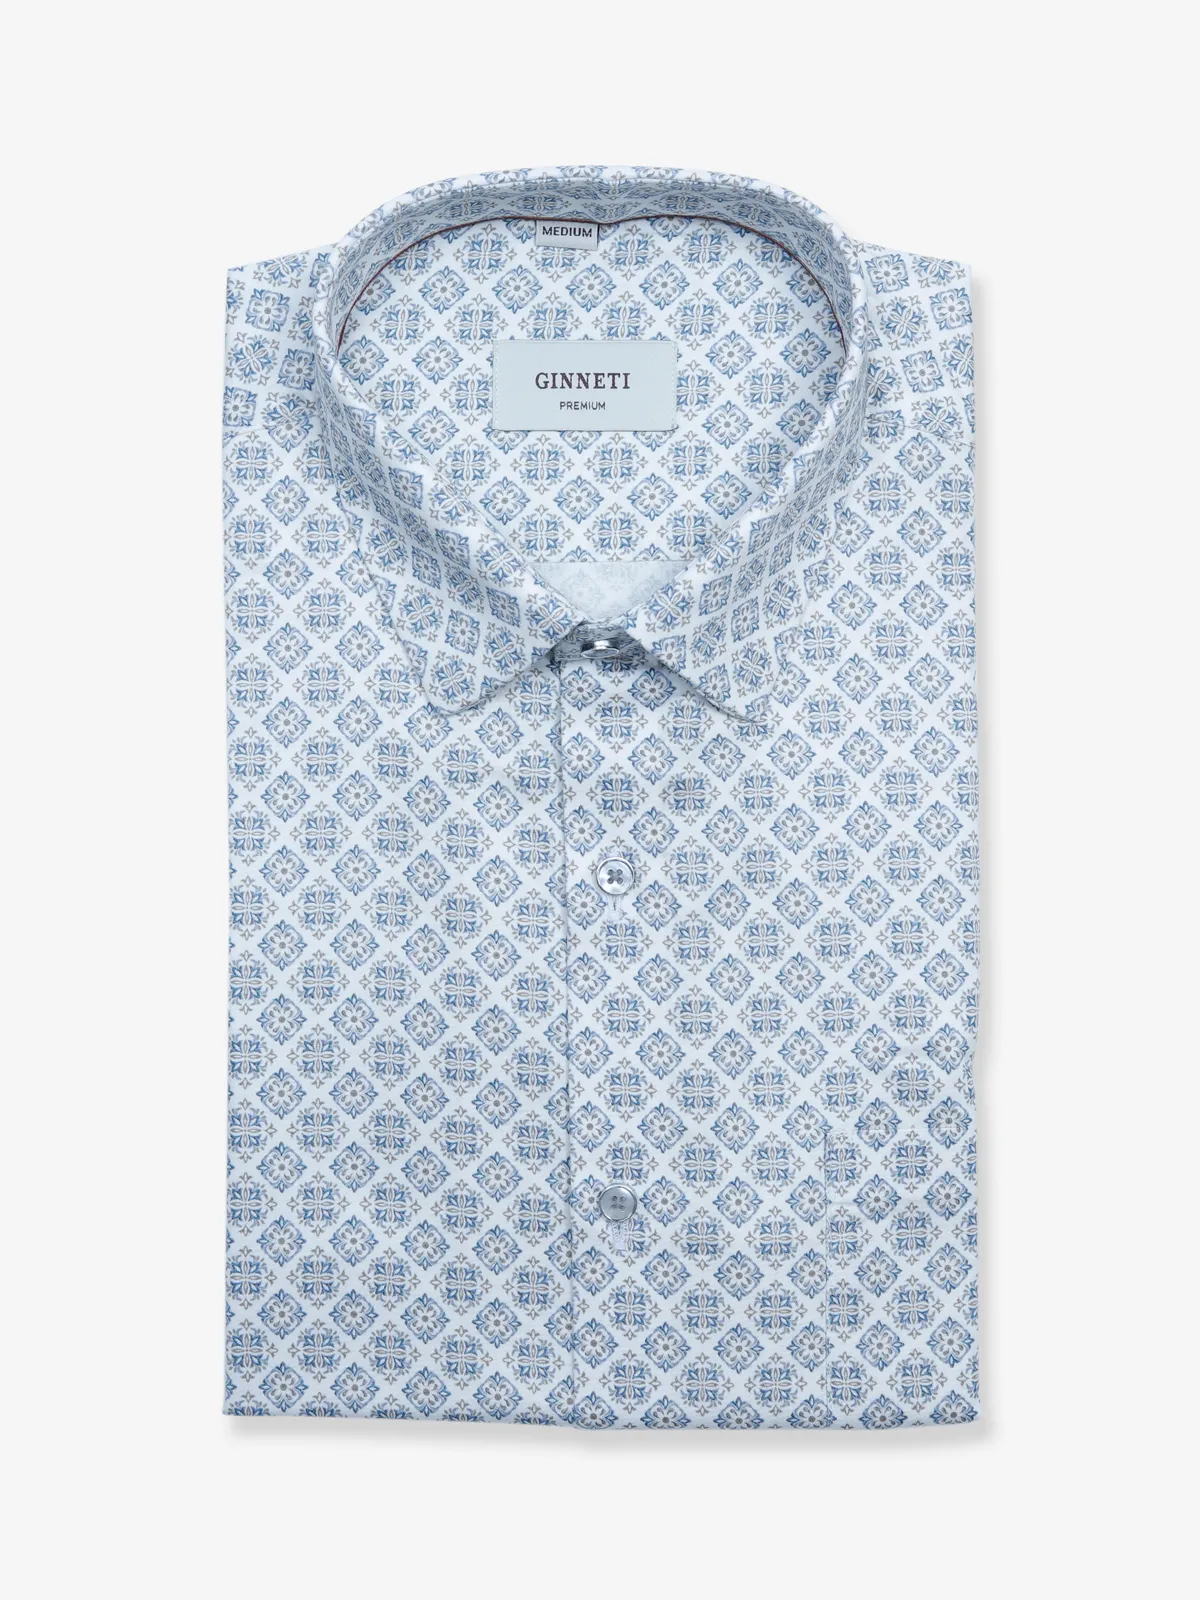 Ginneti printed white cotton shirt